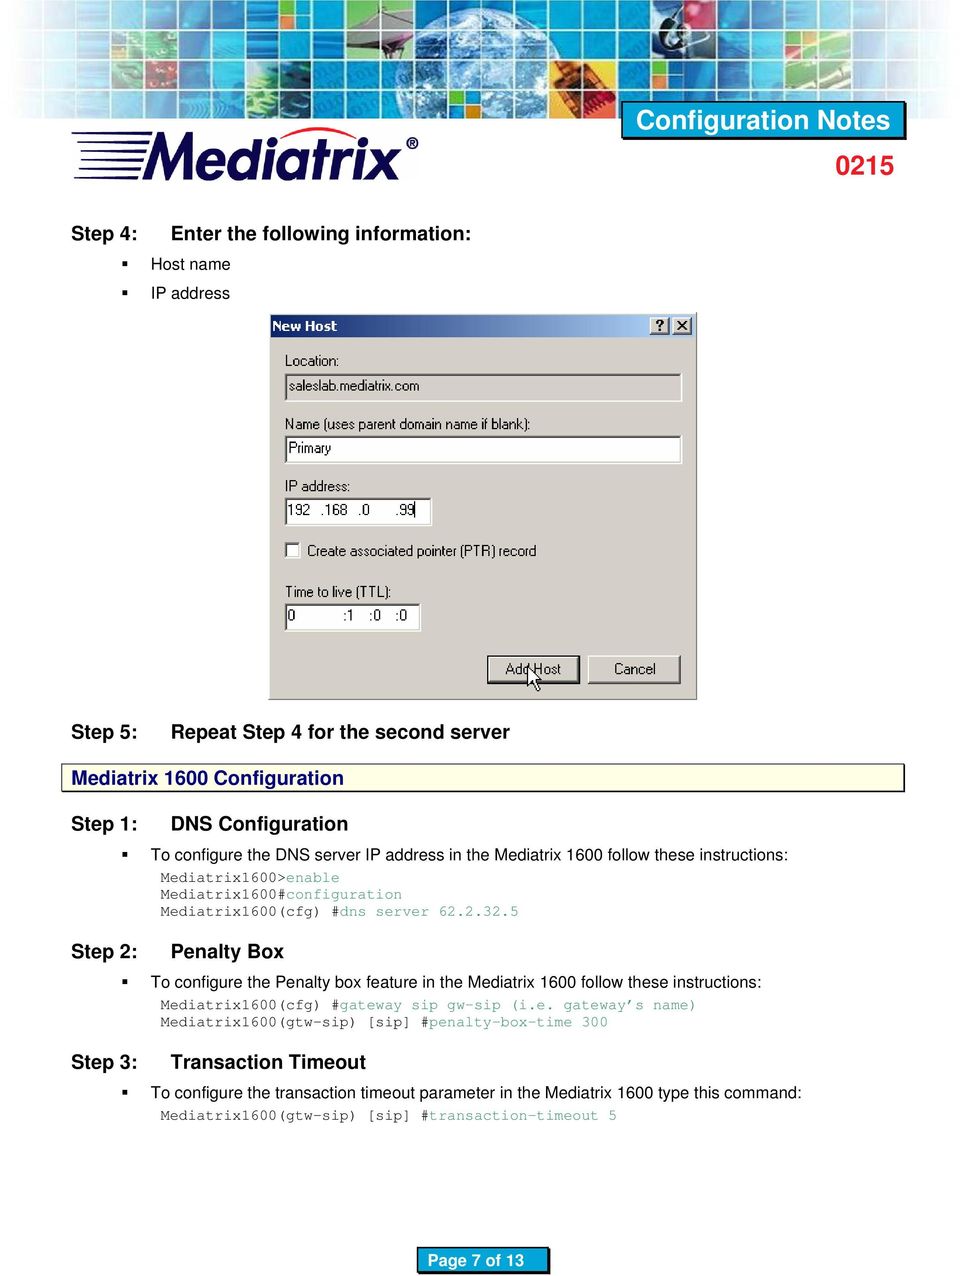 5 Penalty Box To configure the Penalty box feature in the Mediatrix 1600 follow these instructions: Mediatrix1600(cfg) #gateway sip gw-sip (i.e. gateway s name) Mediatrix1600(gtw-sip)